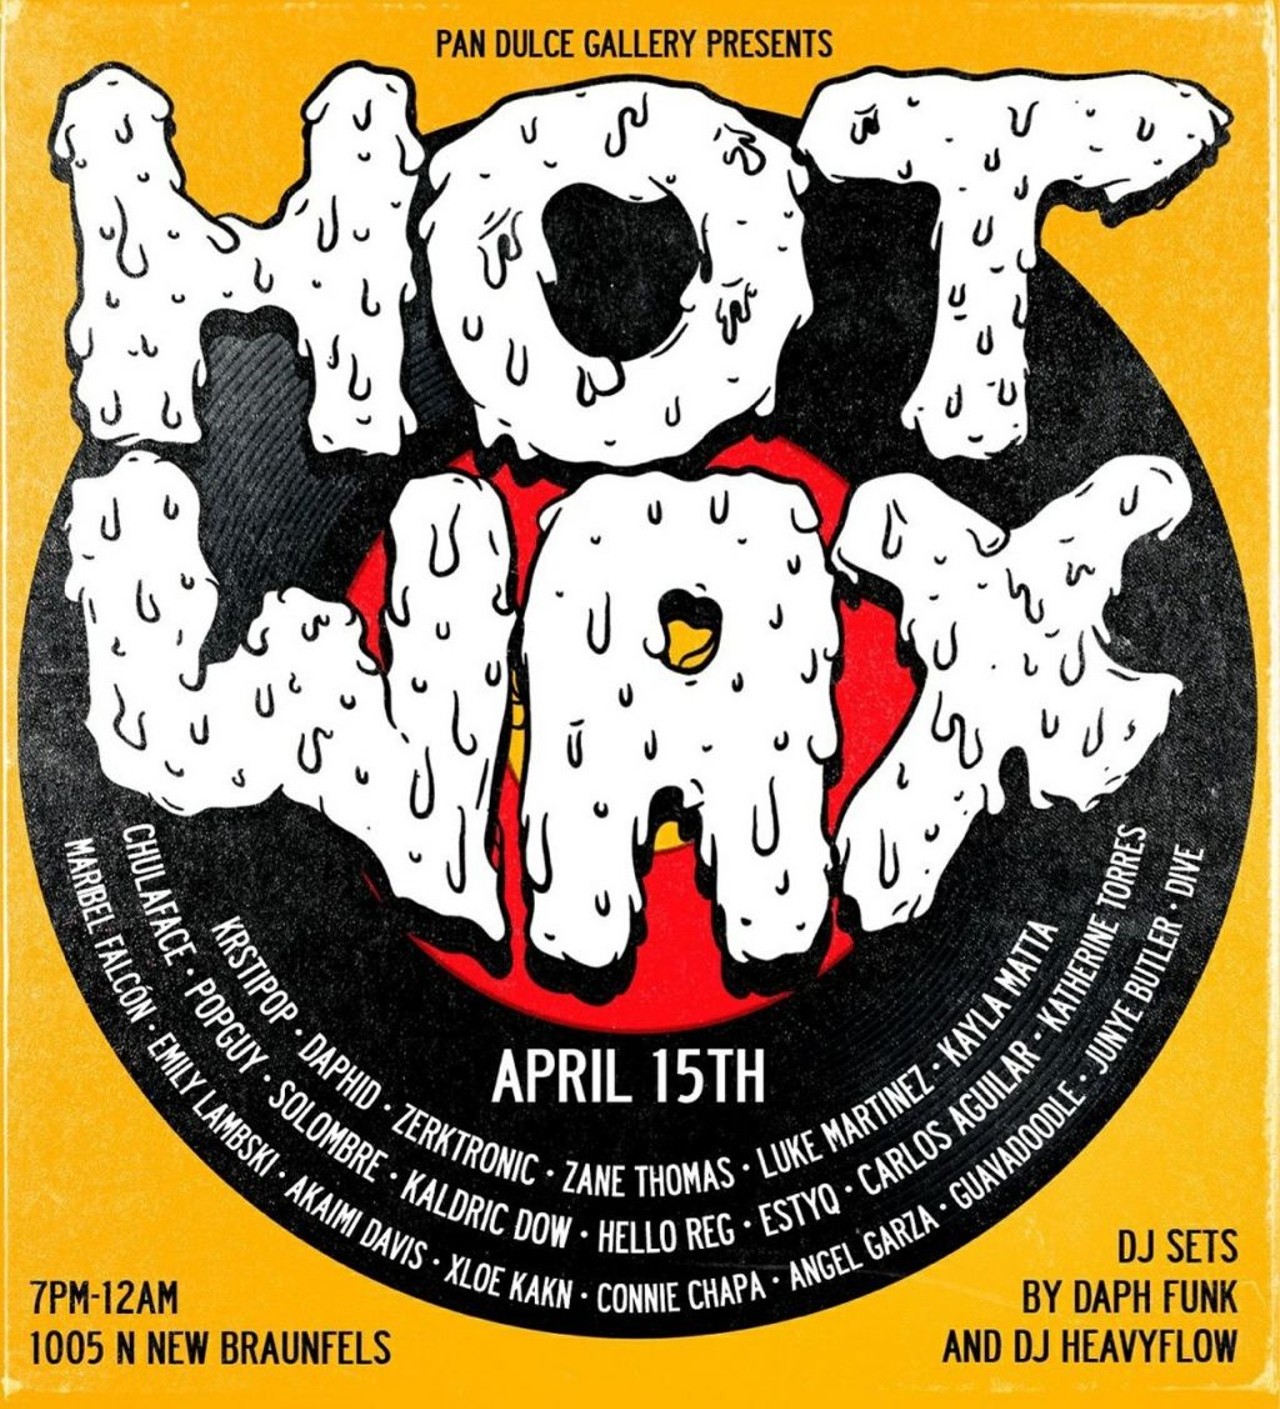 Hot Wax Sat., April 15, 7 p.m.-12 a.m. at Pan Dulce Gallery